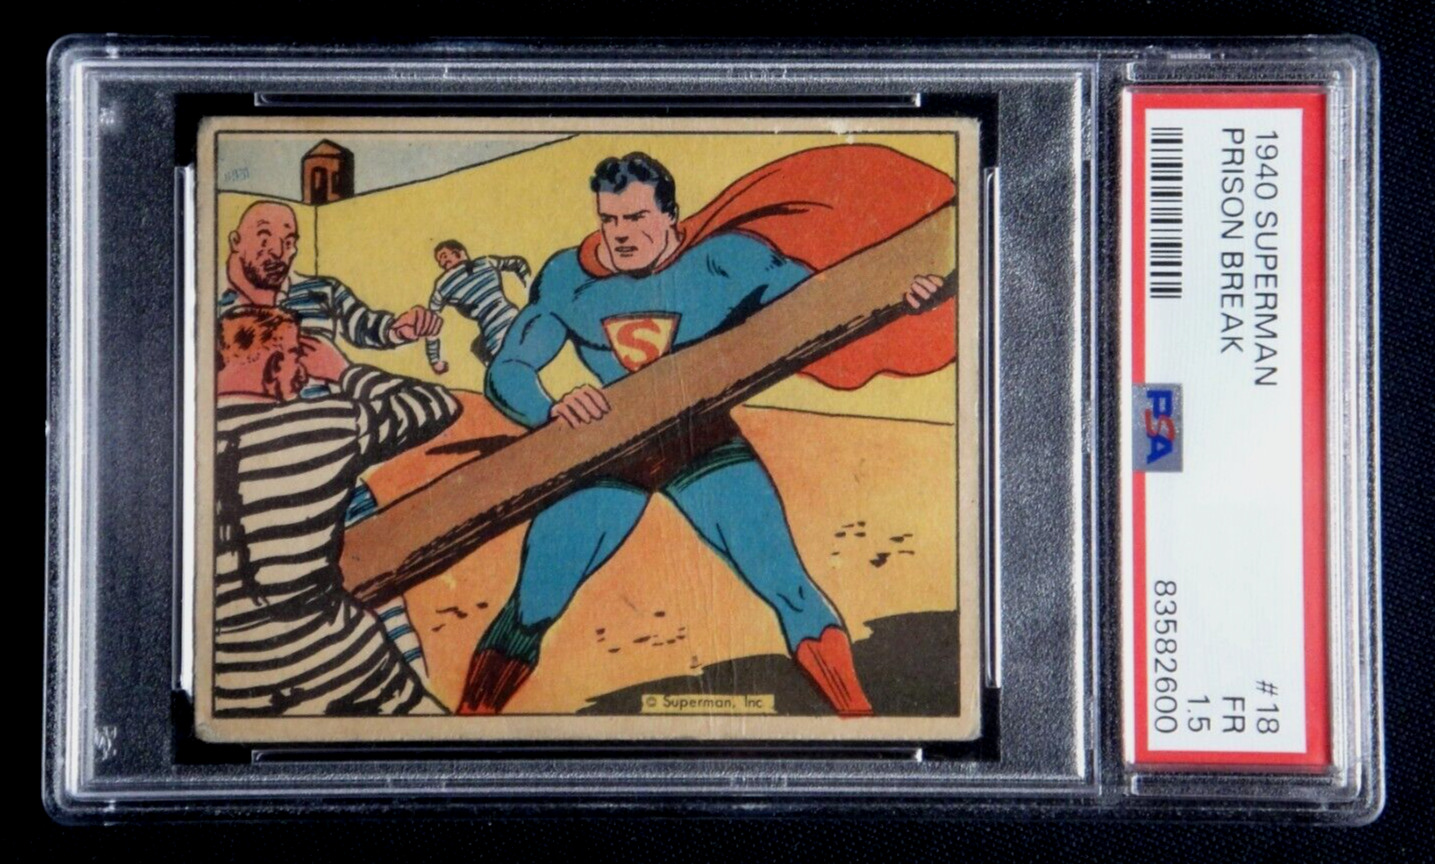 1940 SUPERMAN PRISON BREAK CARD #18 PSA 1.5 FAIR RARE ISSUE GUM INC. GRADED